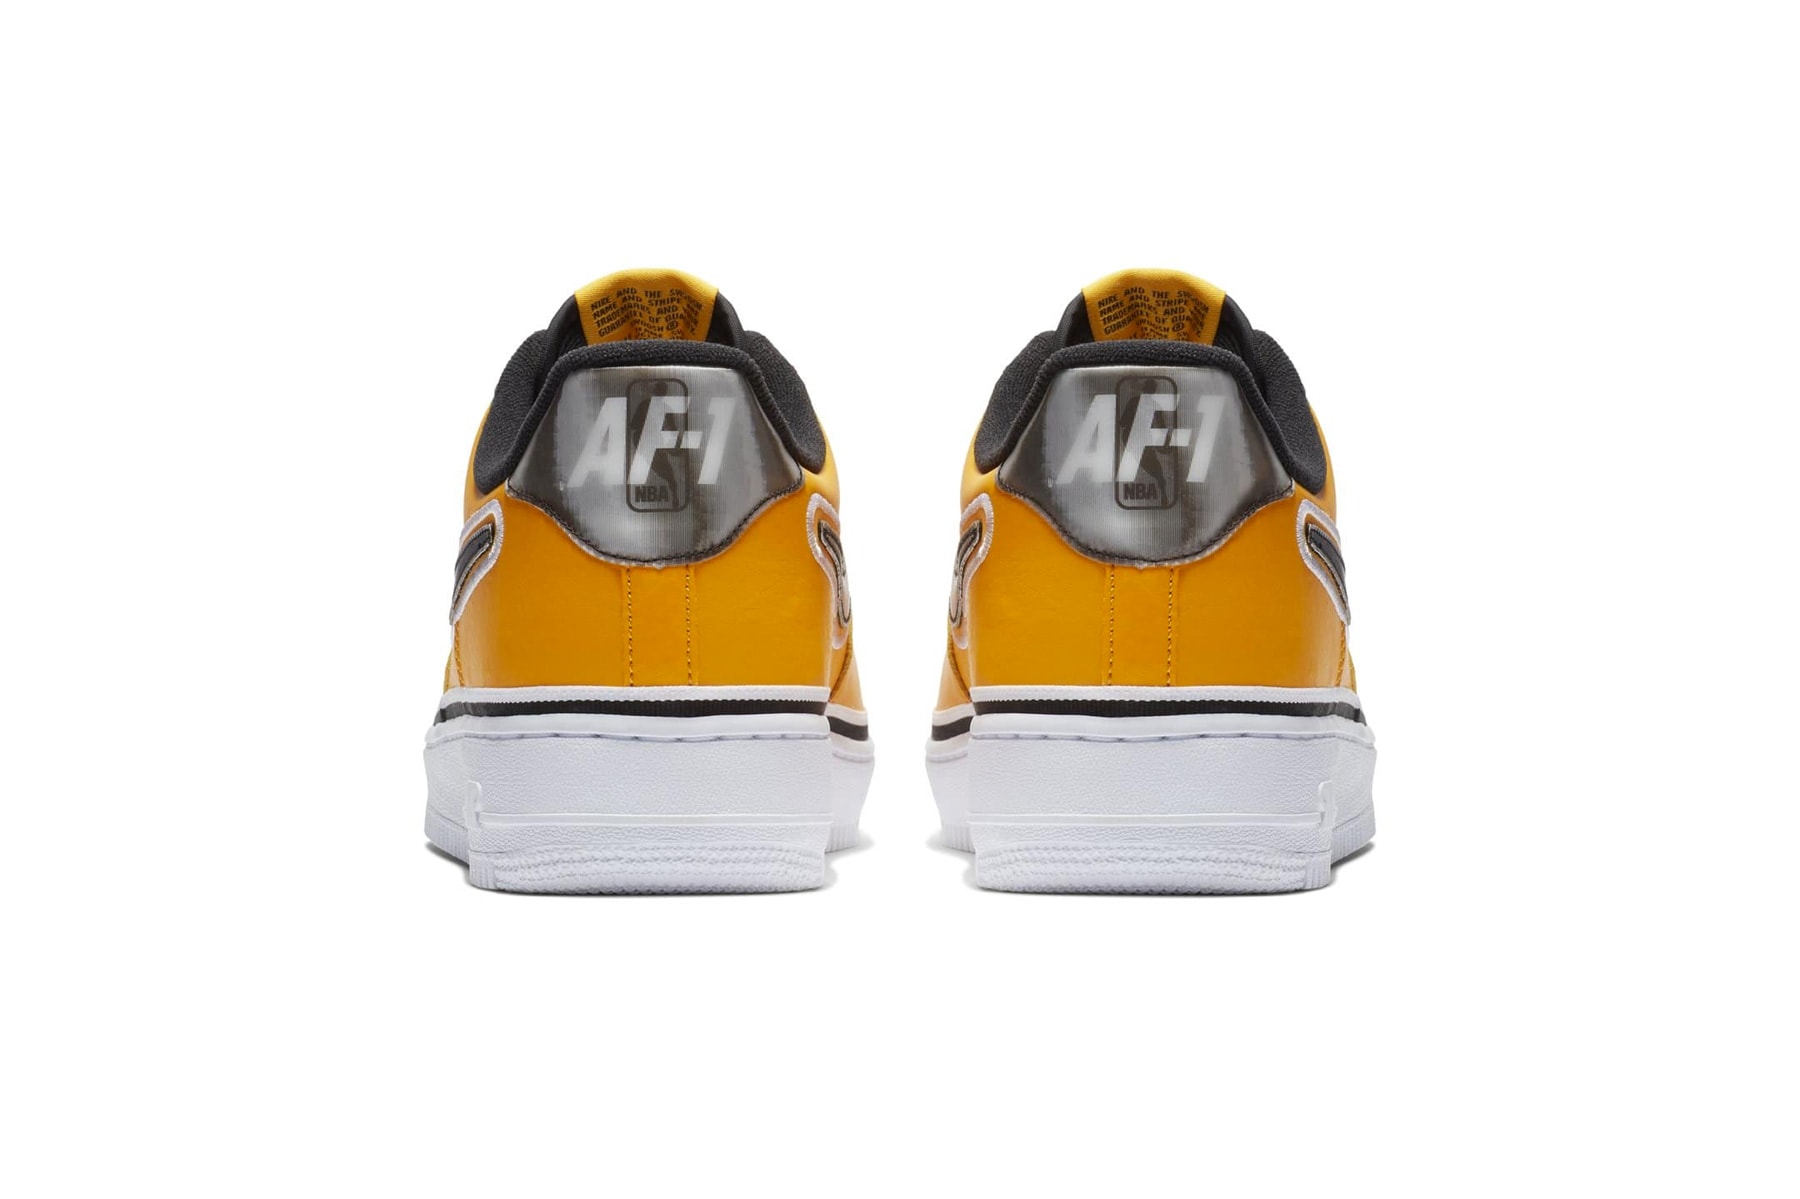 Nike Air Force 1 Low NBA Los Angeles Lakers LA colorway yellow black colorway sneaker release date info price details basketball team colors